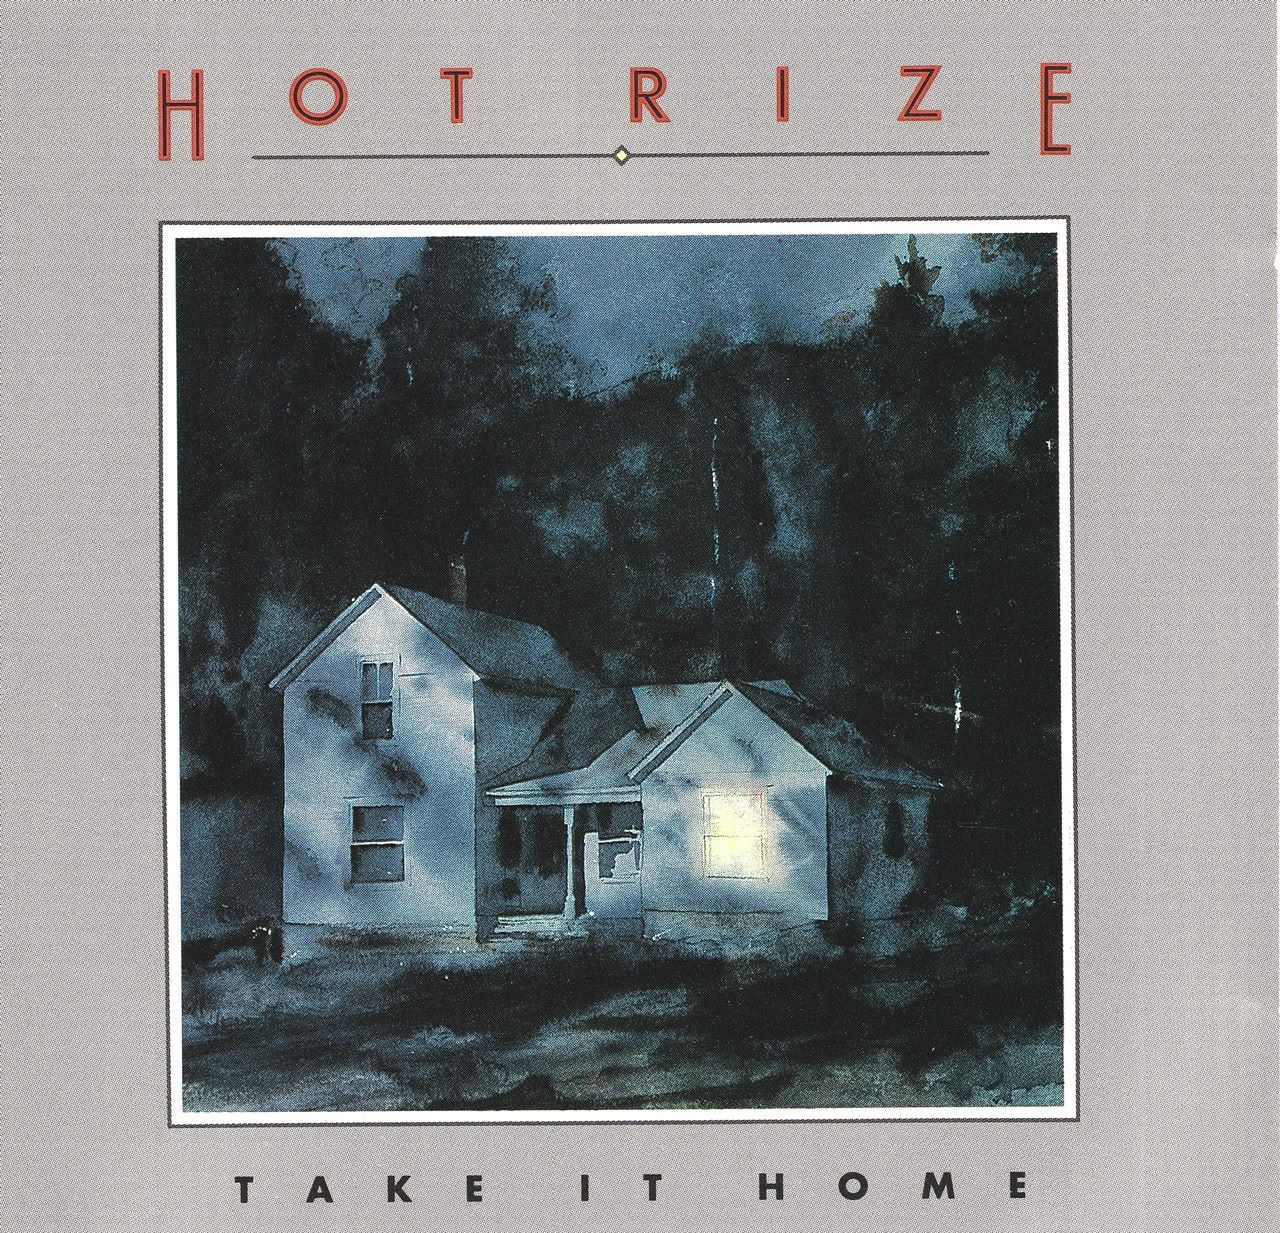 Hot Rize – Take It Home cover album